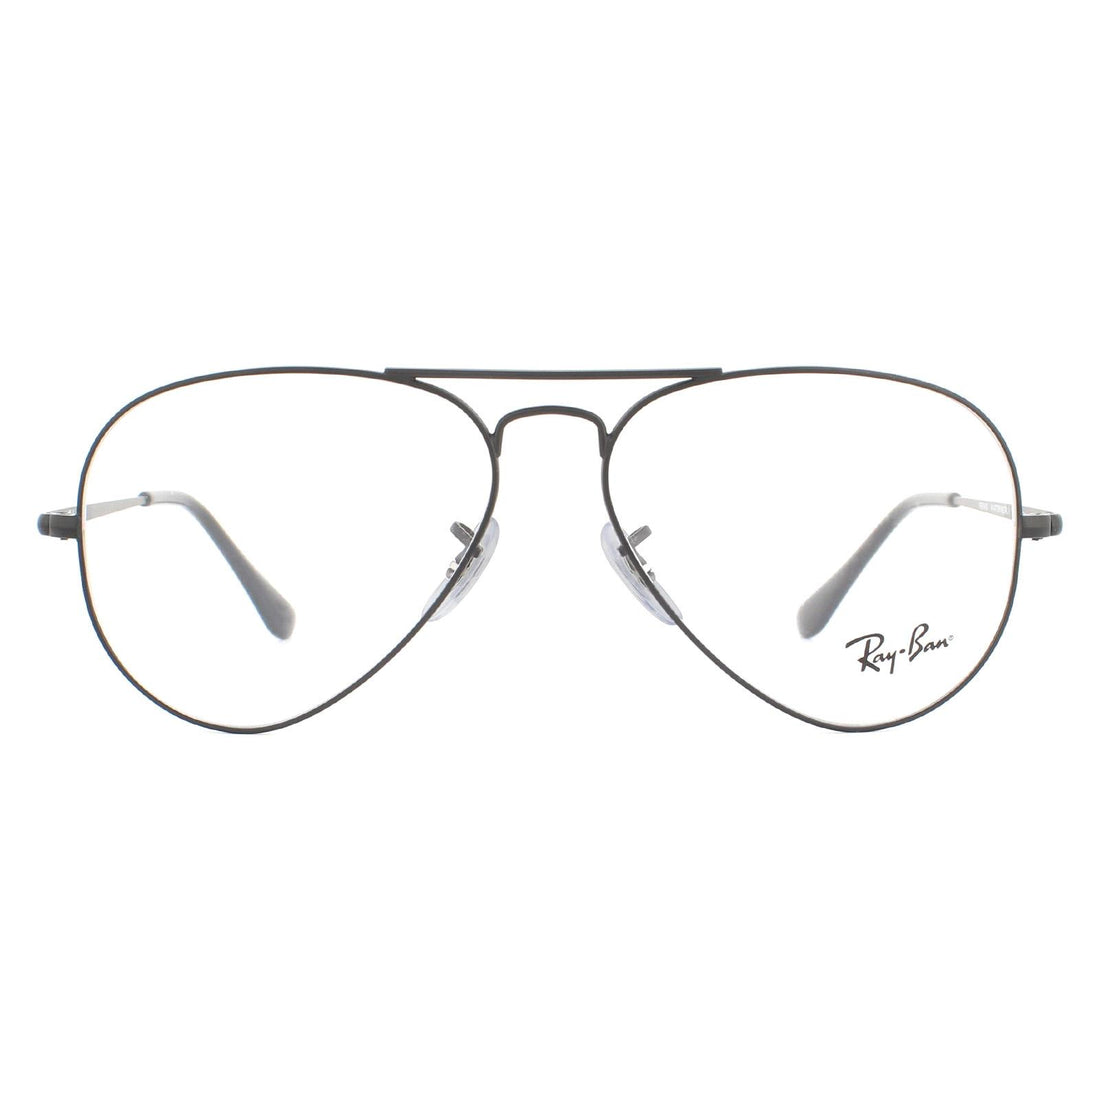 Ray-Ban 6489 Aviator Glasses Frames Black